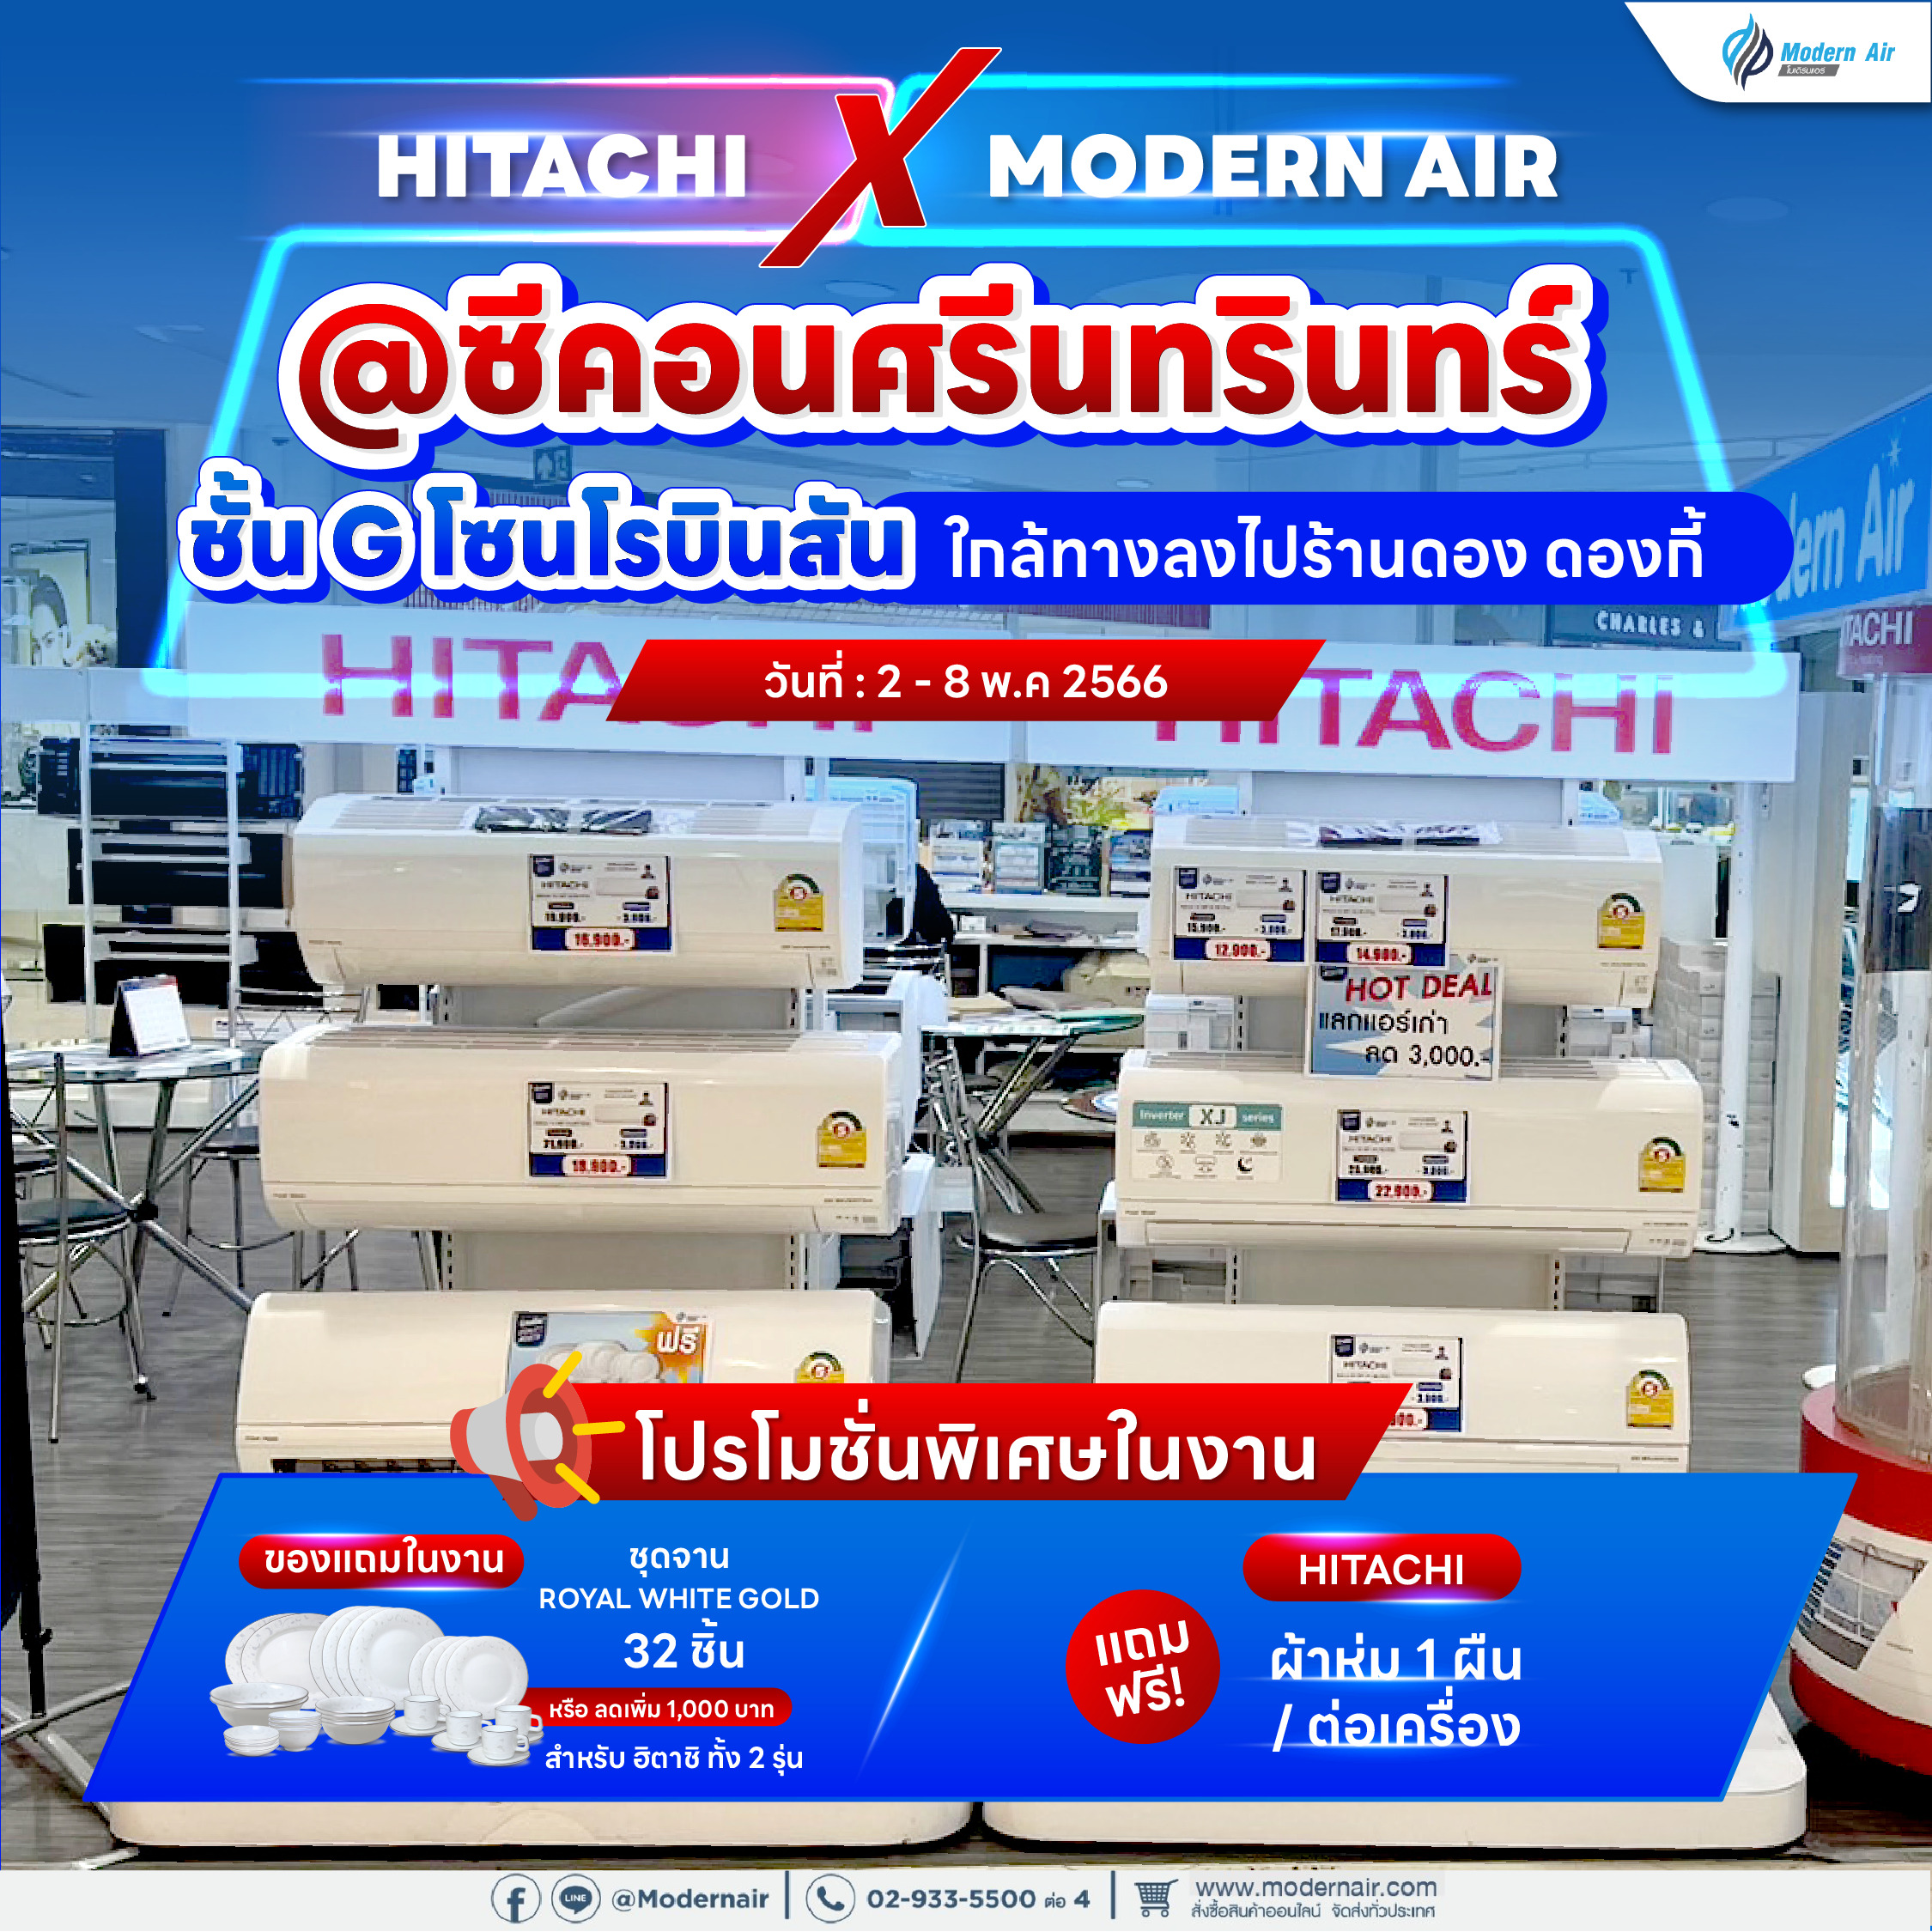 Hitachi x Modern Air @ Seacon Square ศรีนครินทร์ 